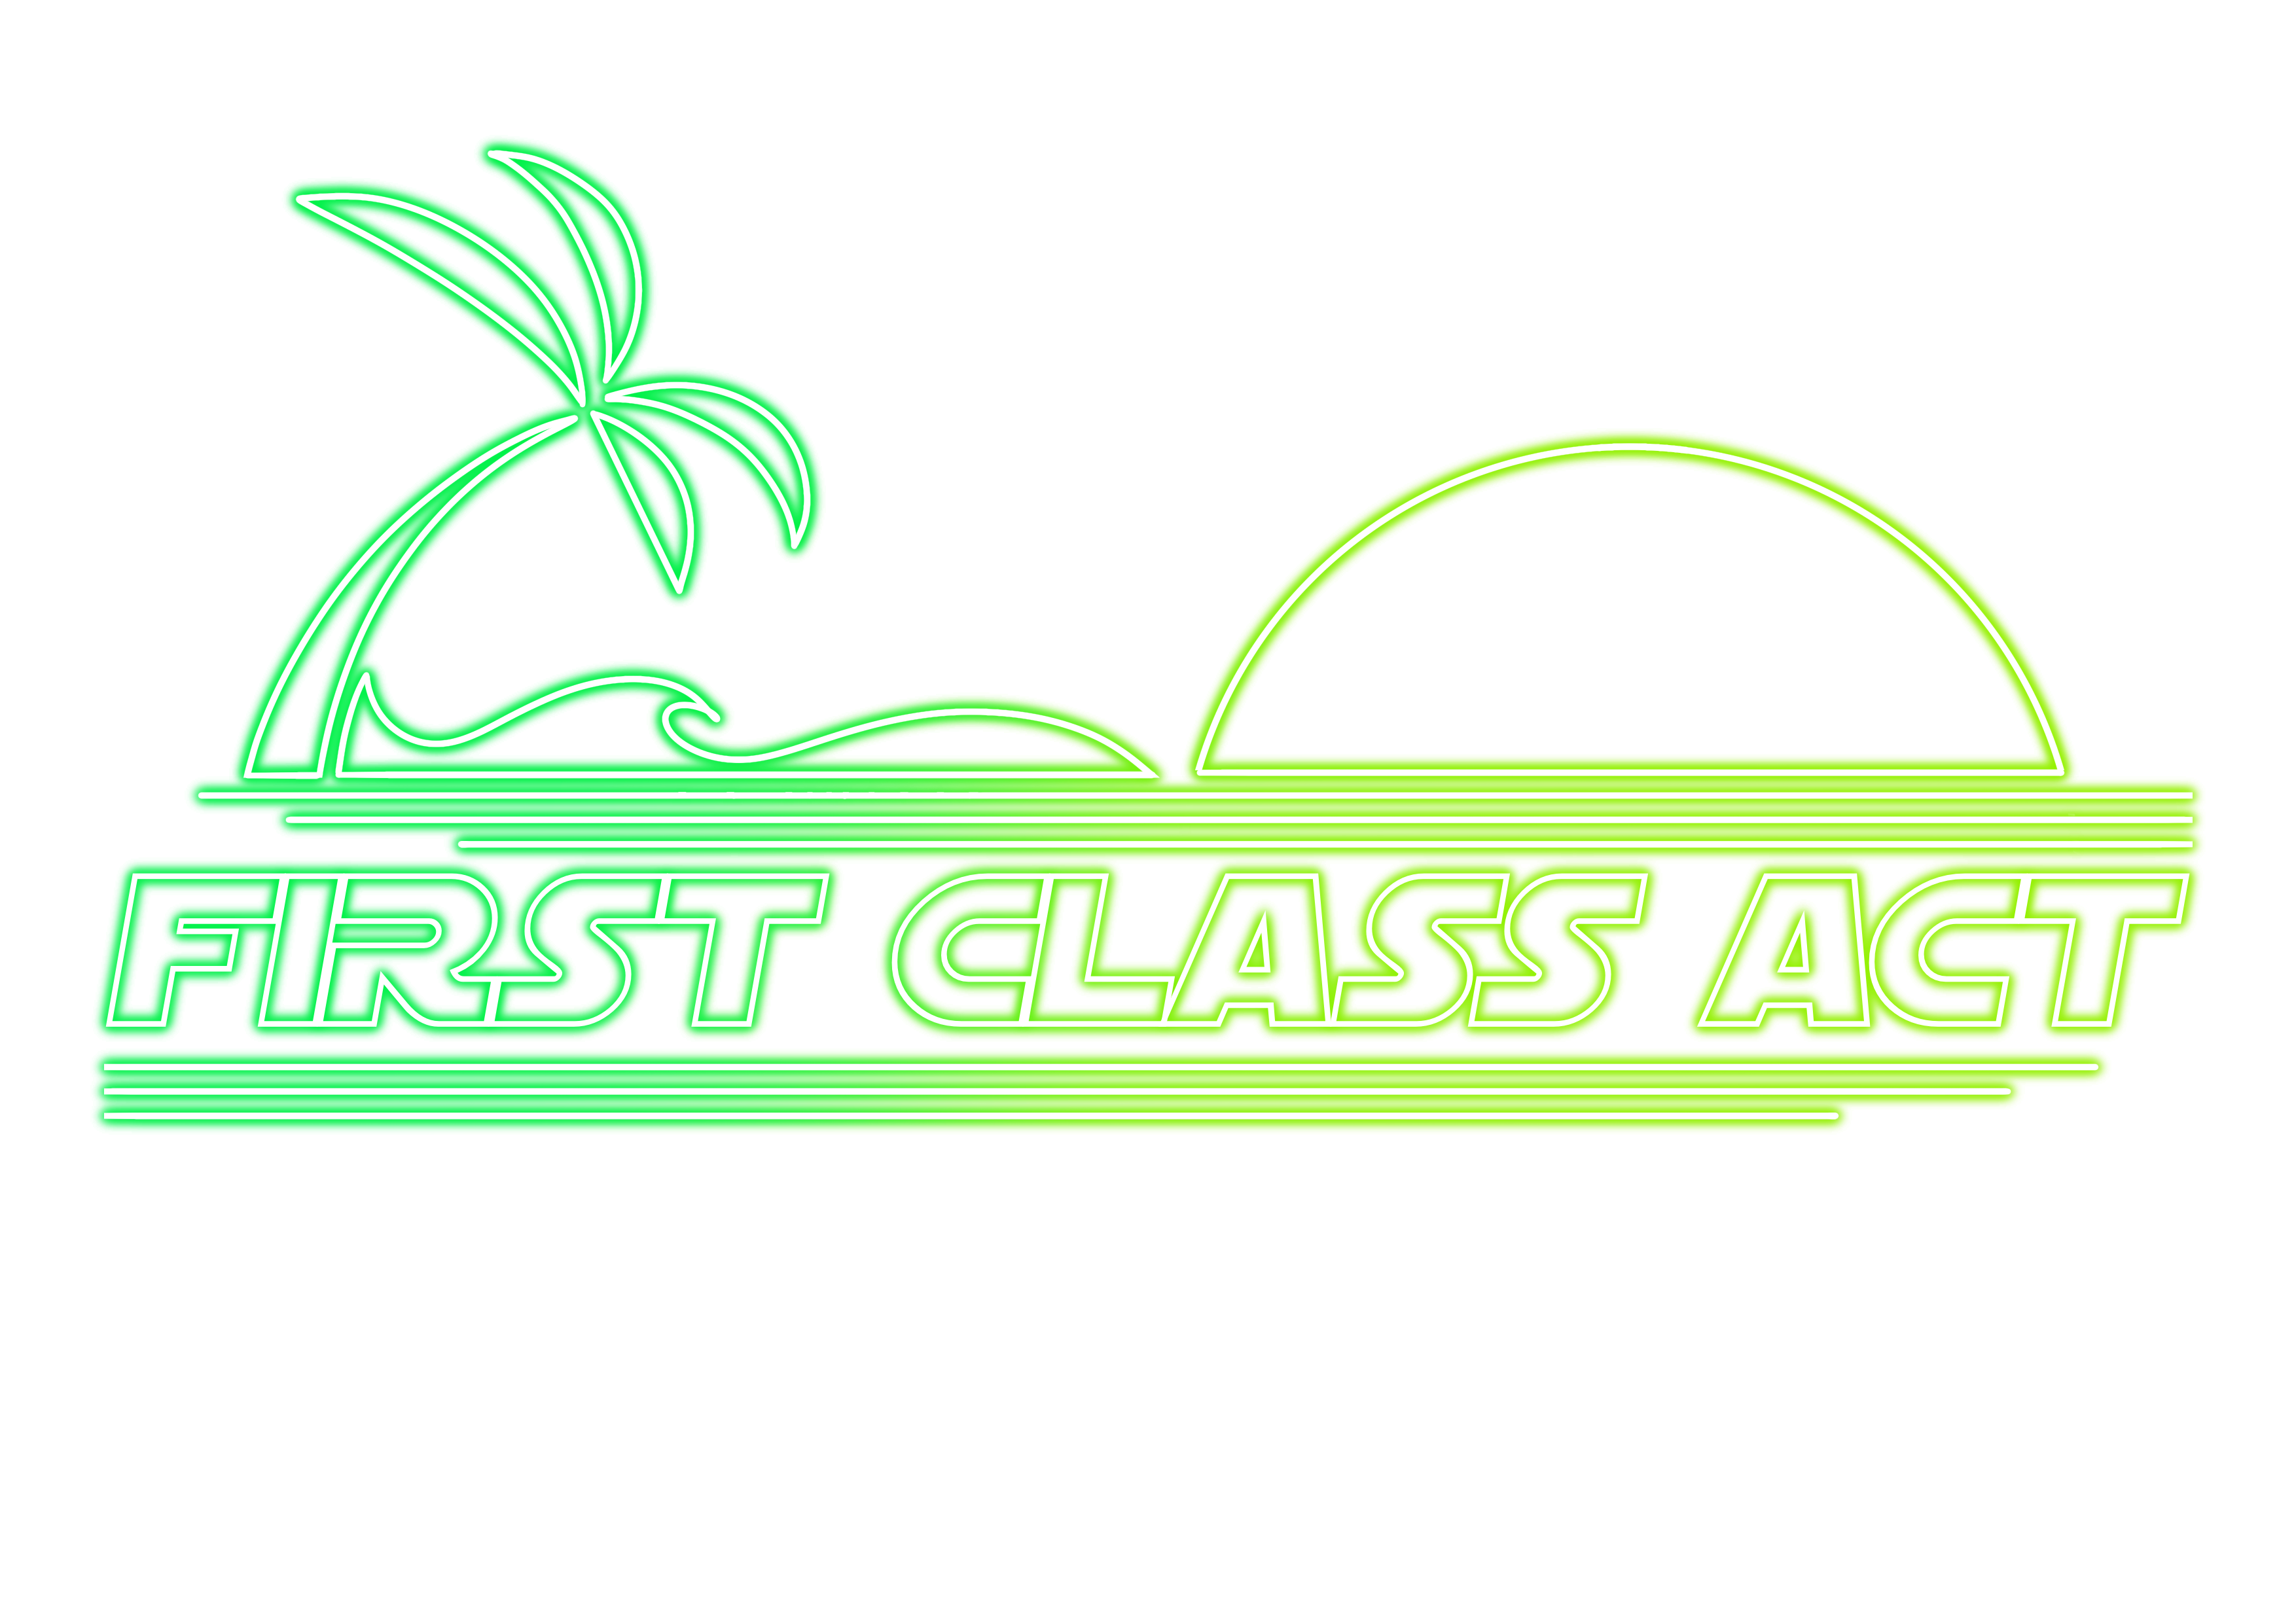 First Class Act